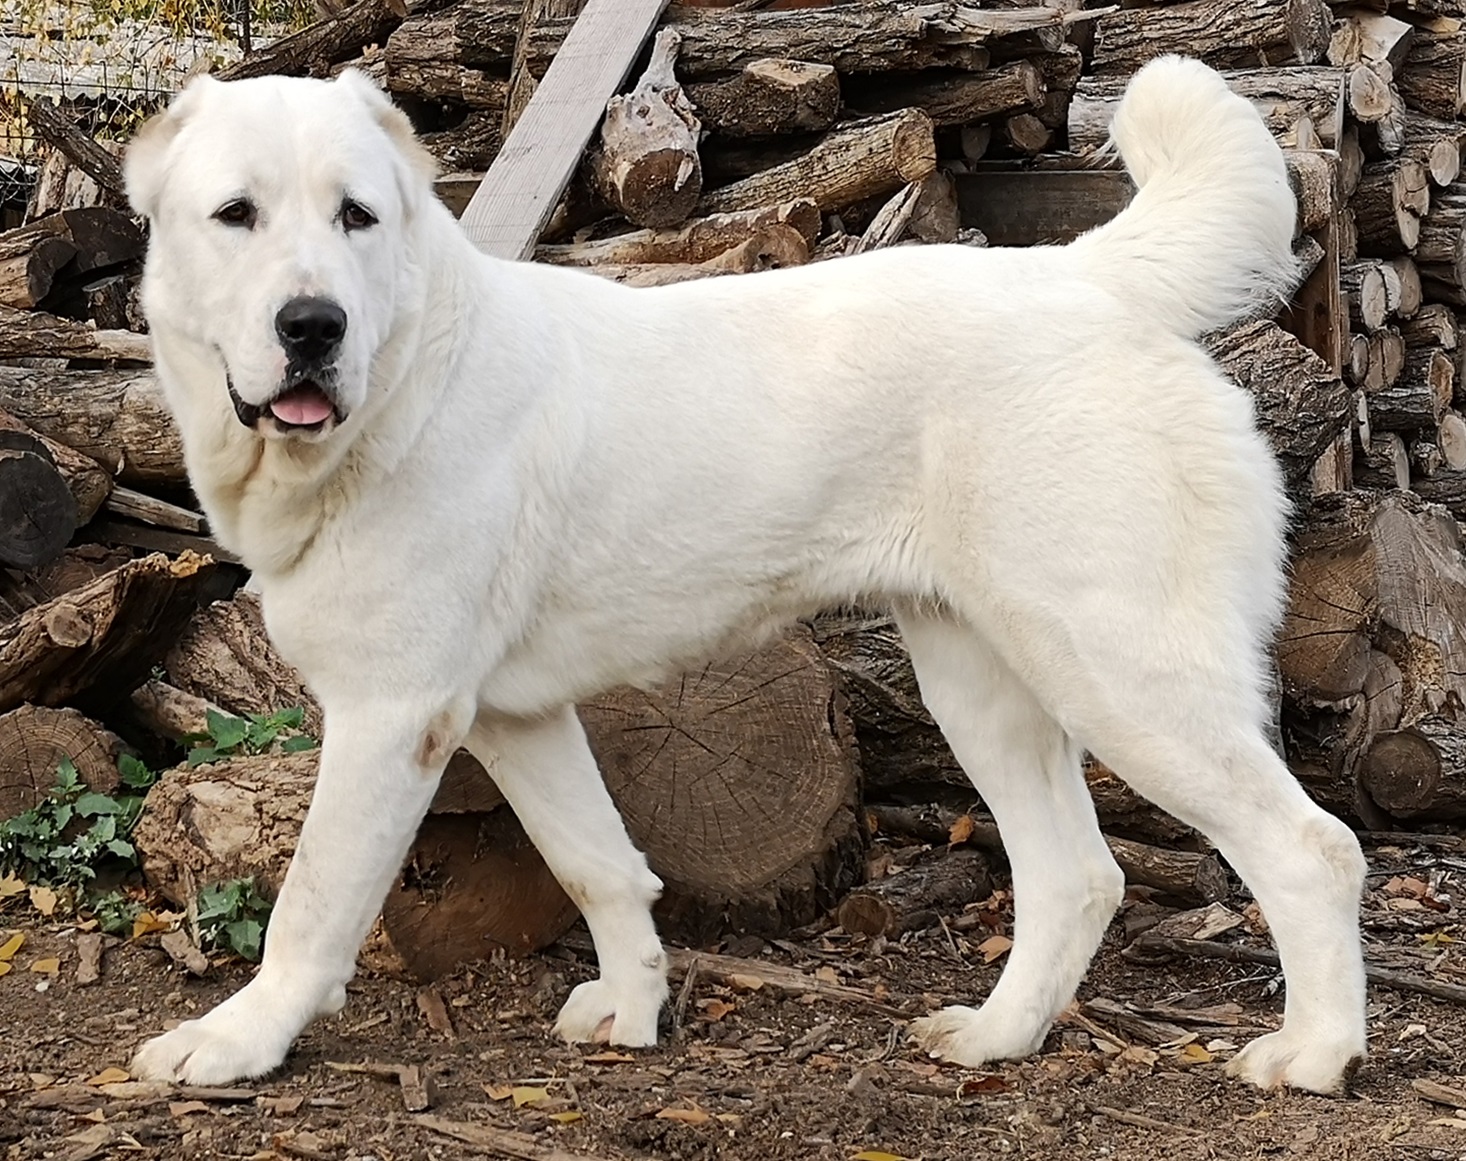 A Central Asian Shepherd dog